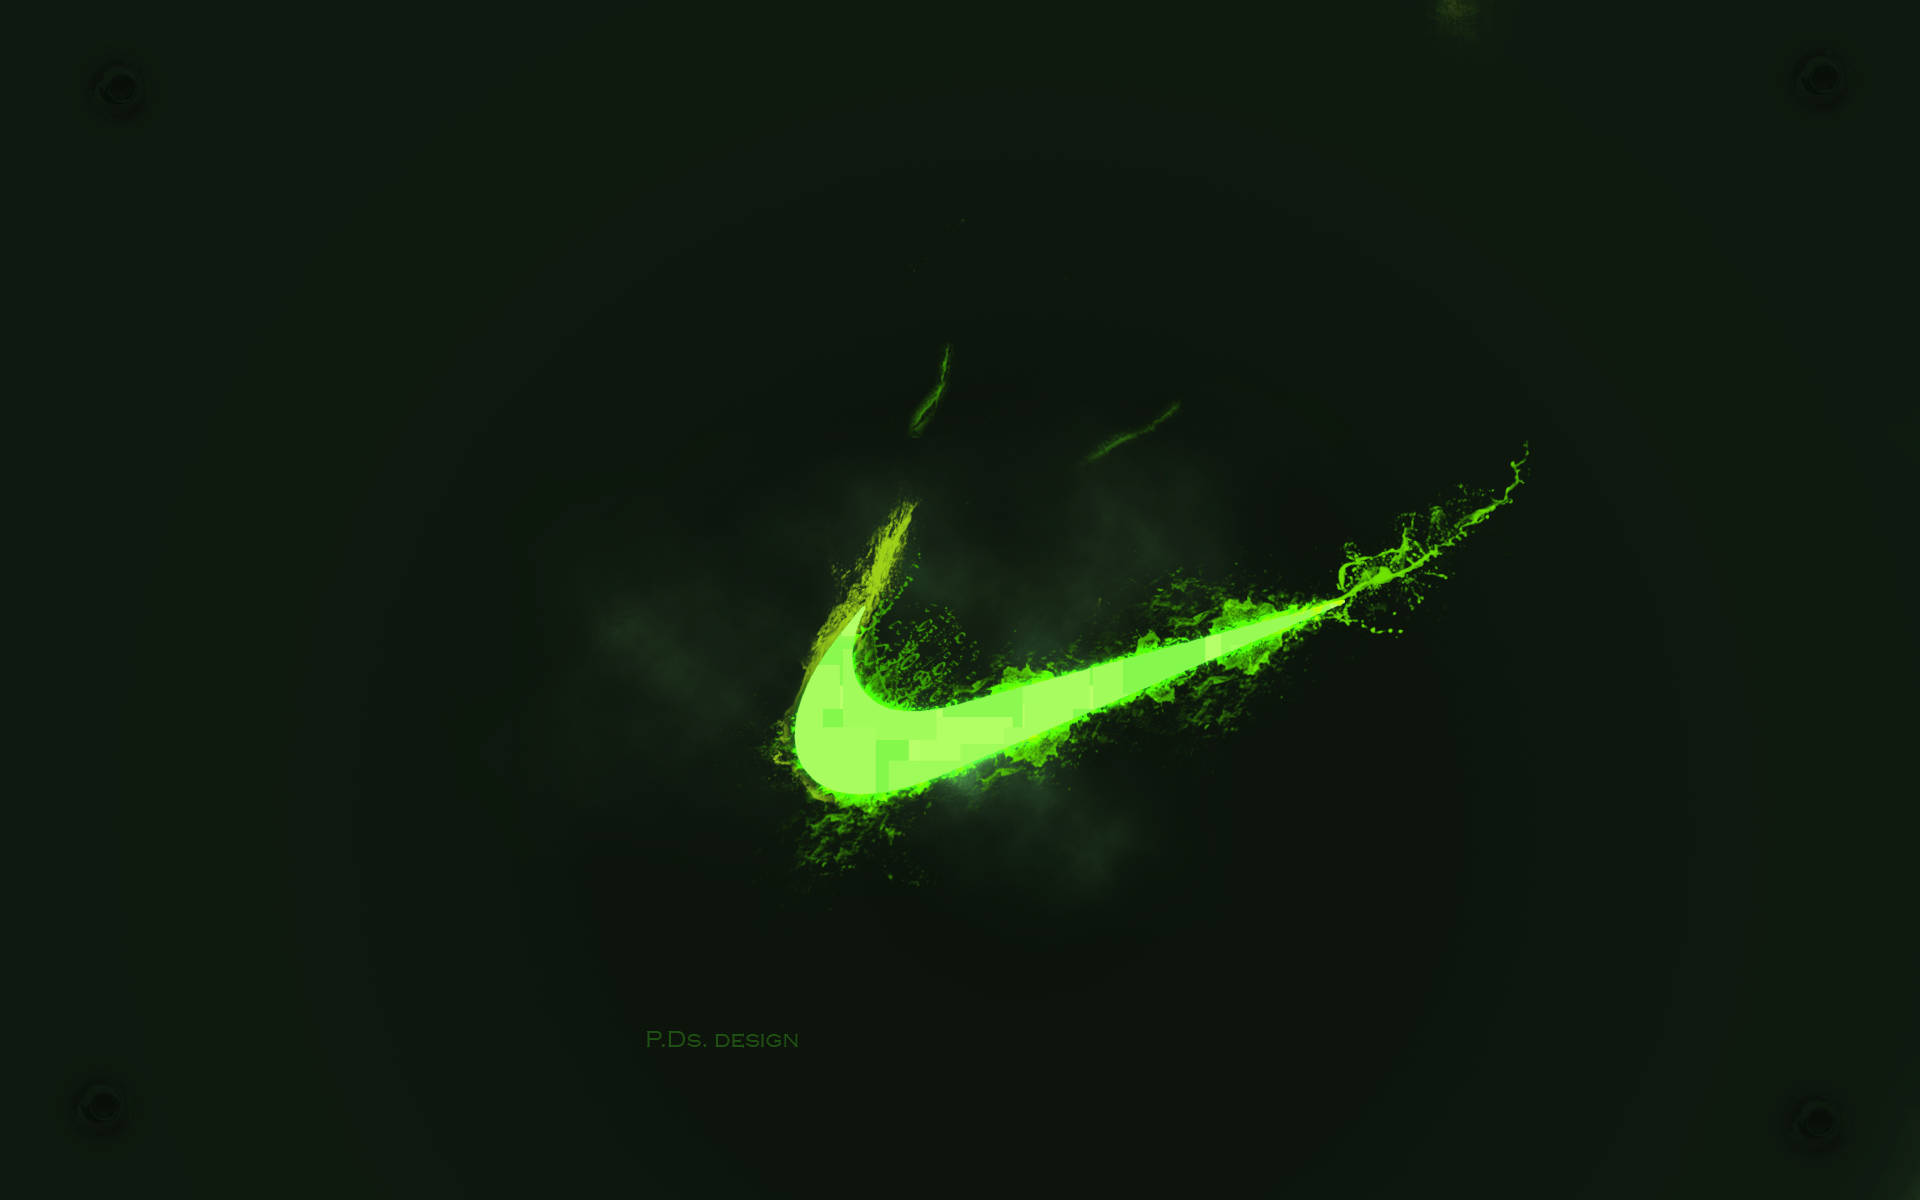 Nike Neon Wallpapers